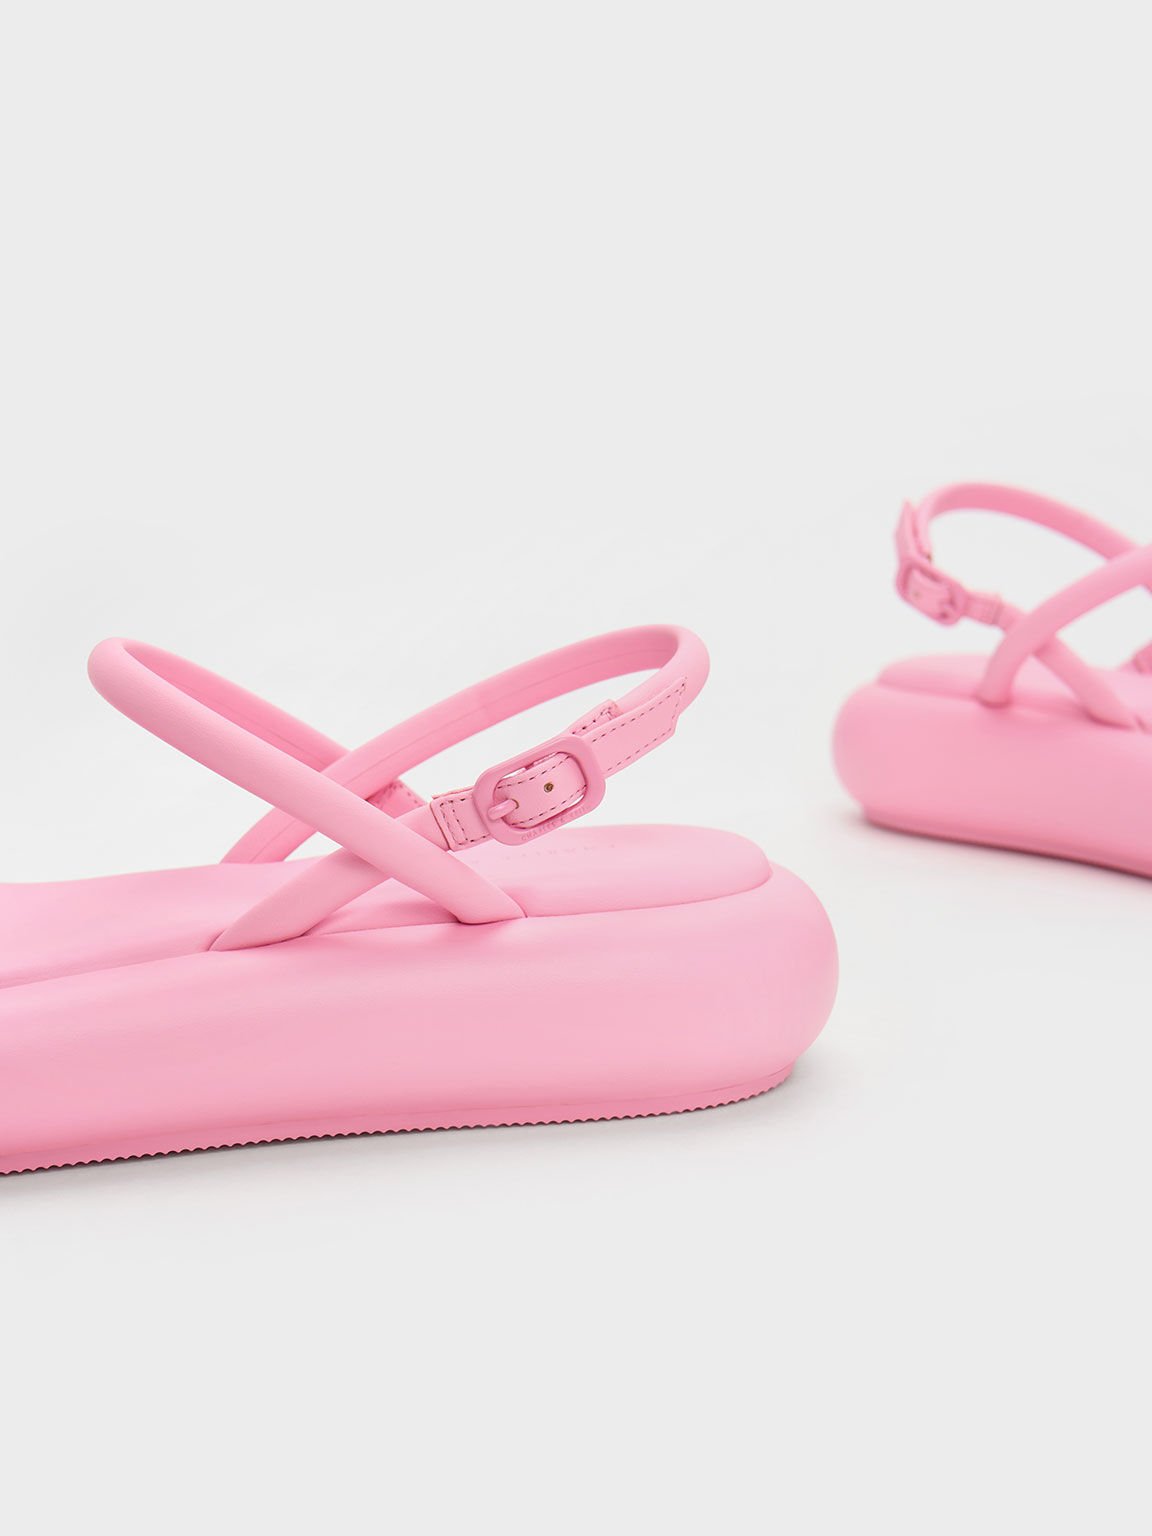 Keiko 細帶厚底涼鞋, 粉紅色, hi-res